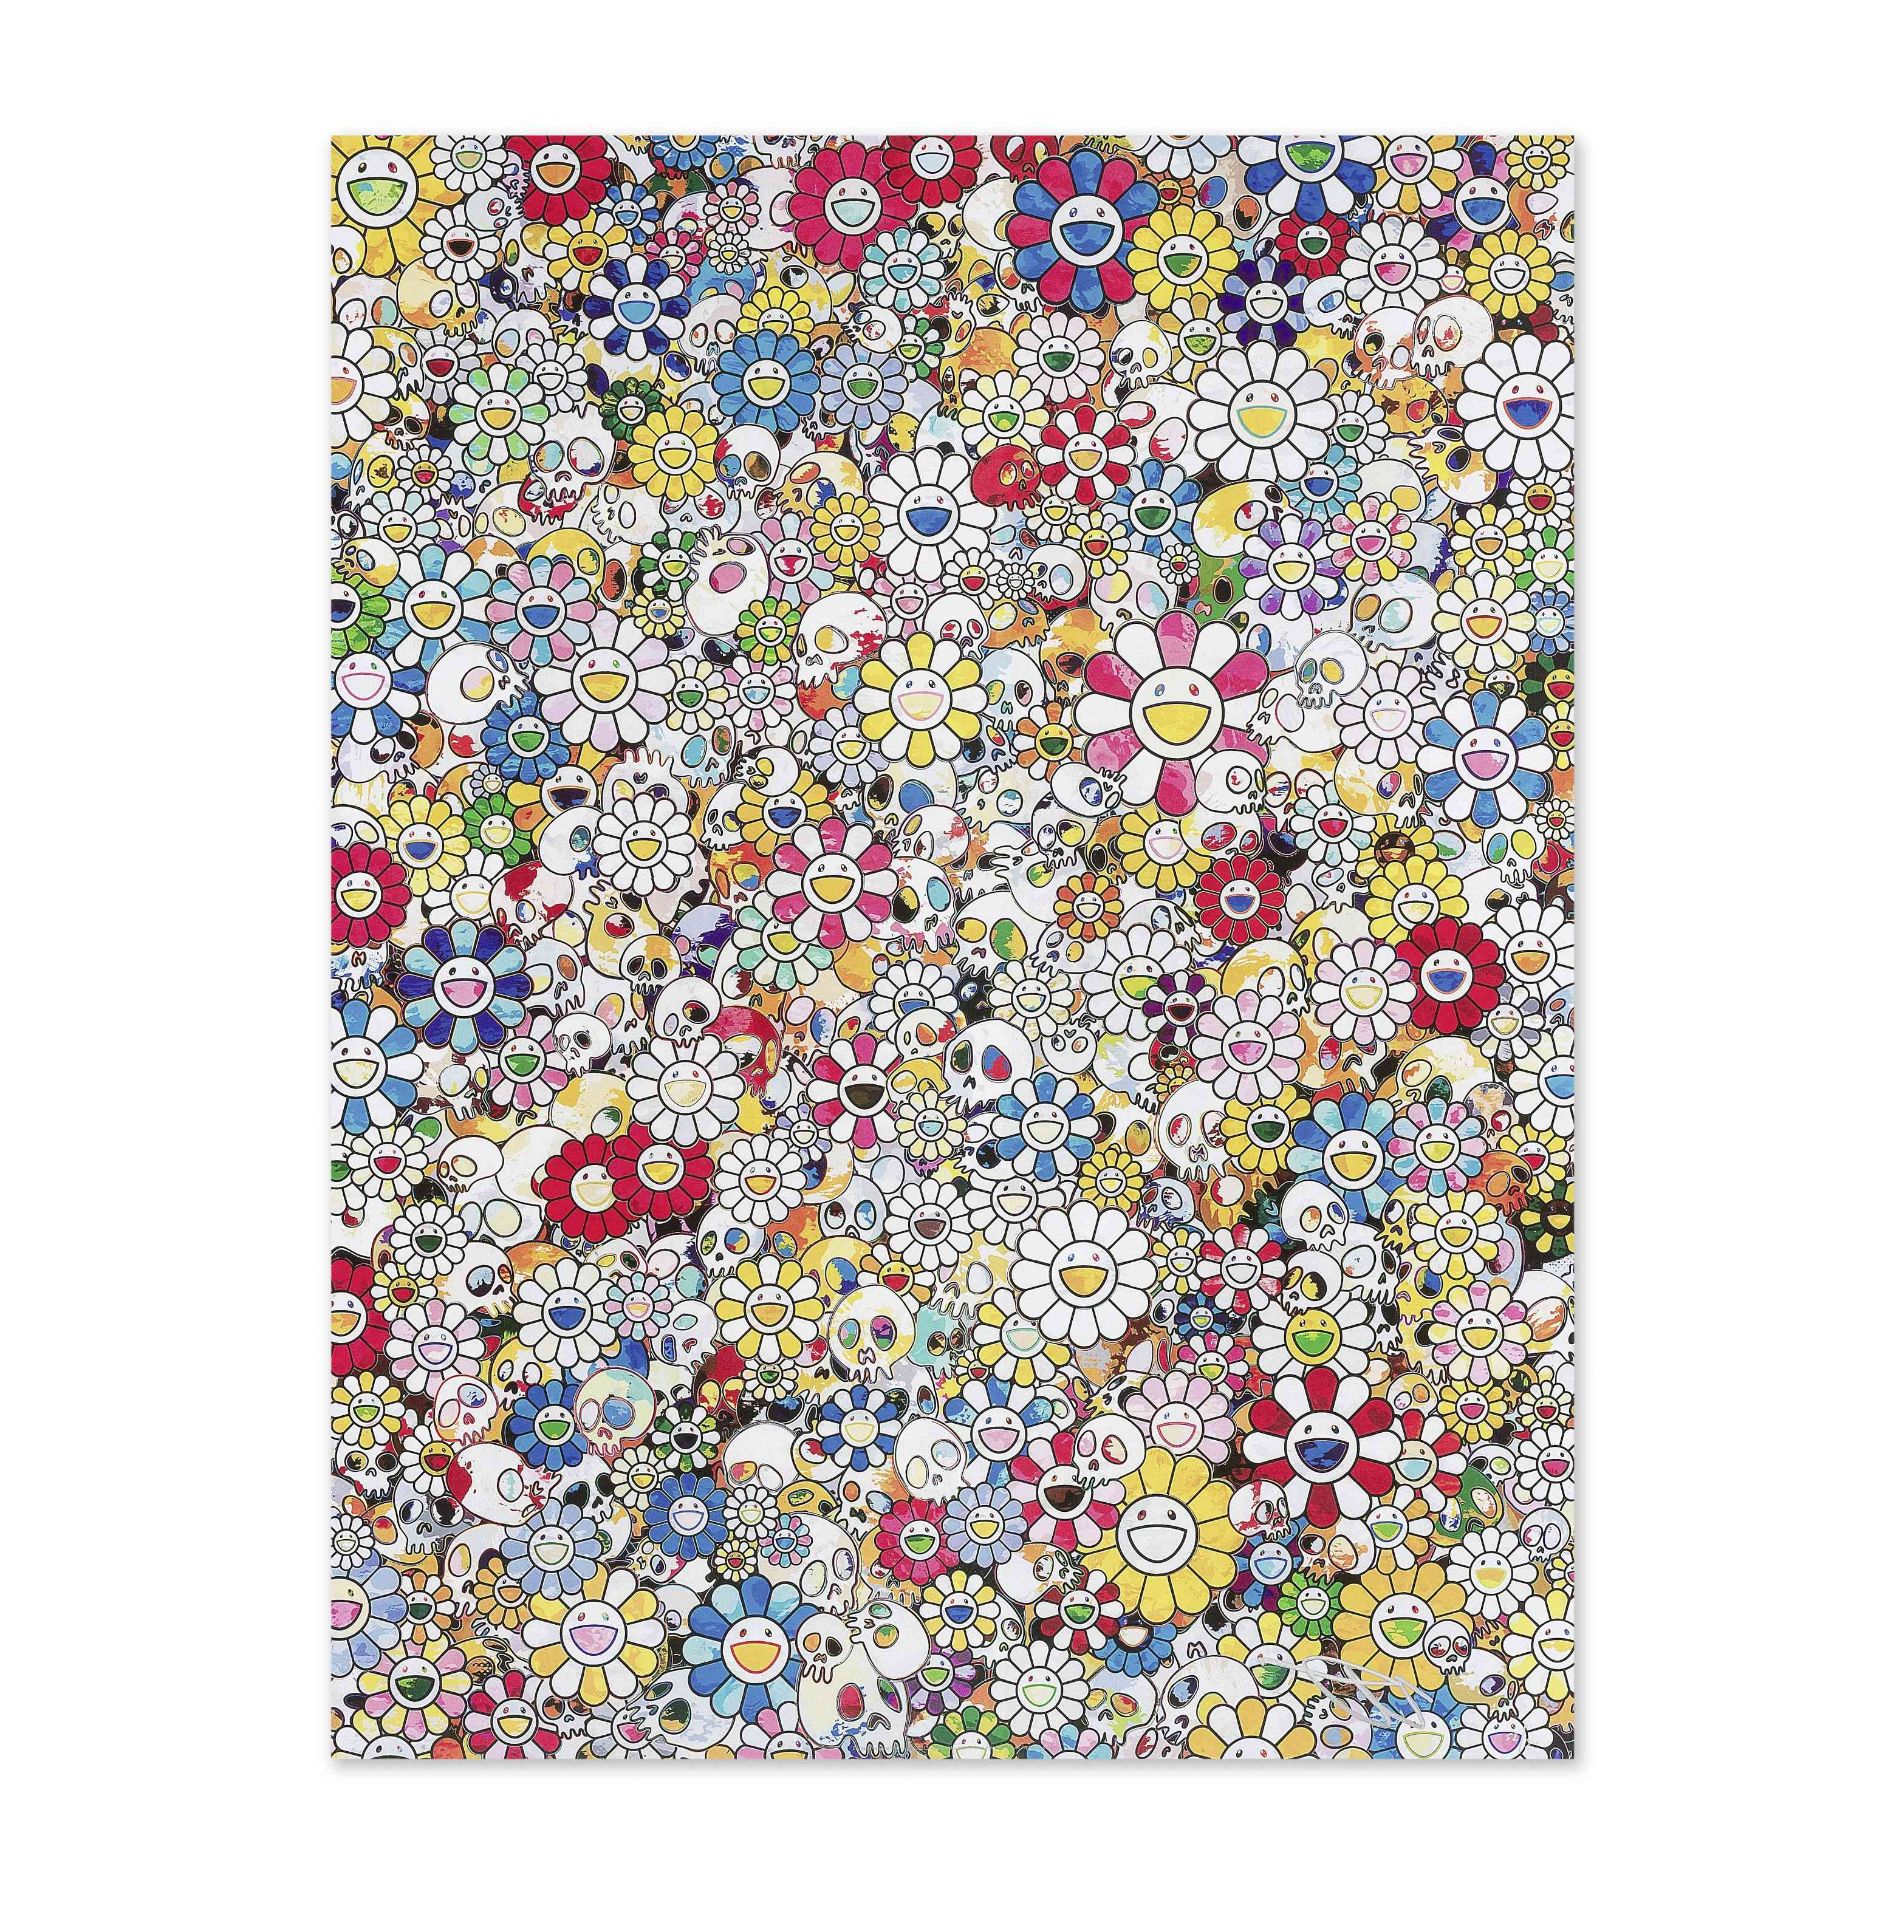 TAKASHI MURAKAMI (NE EN 1962) Skull Flowers Multicolor, 2013 Offset lithographie en couleursSign...